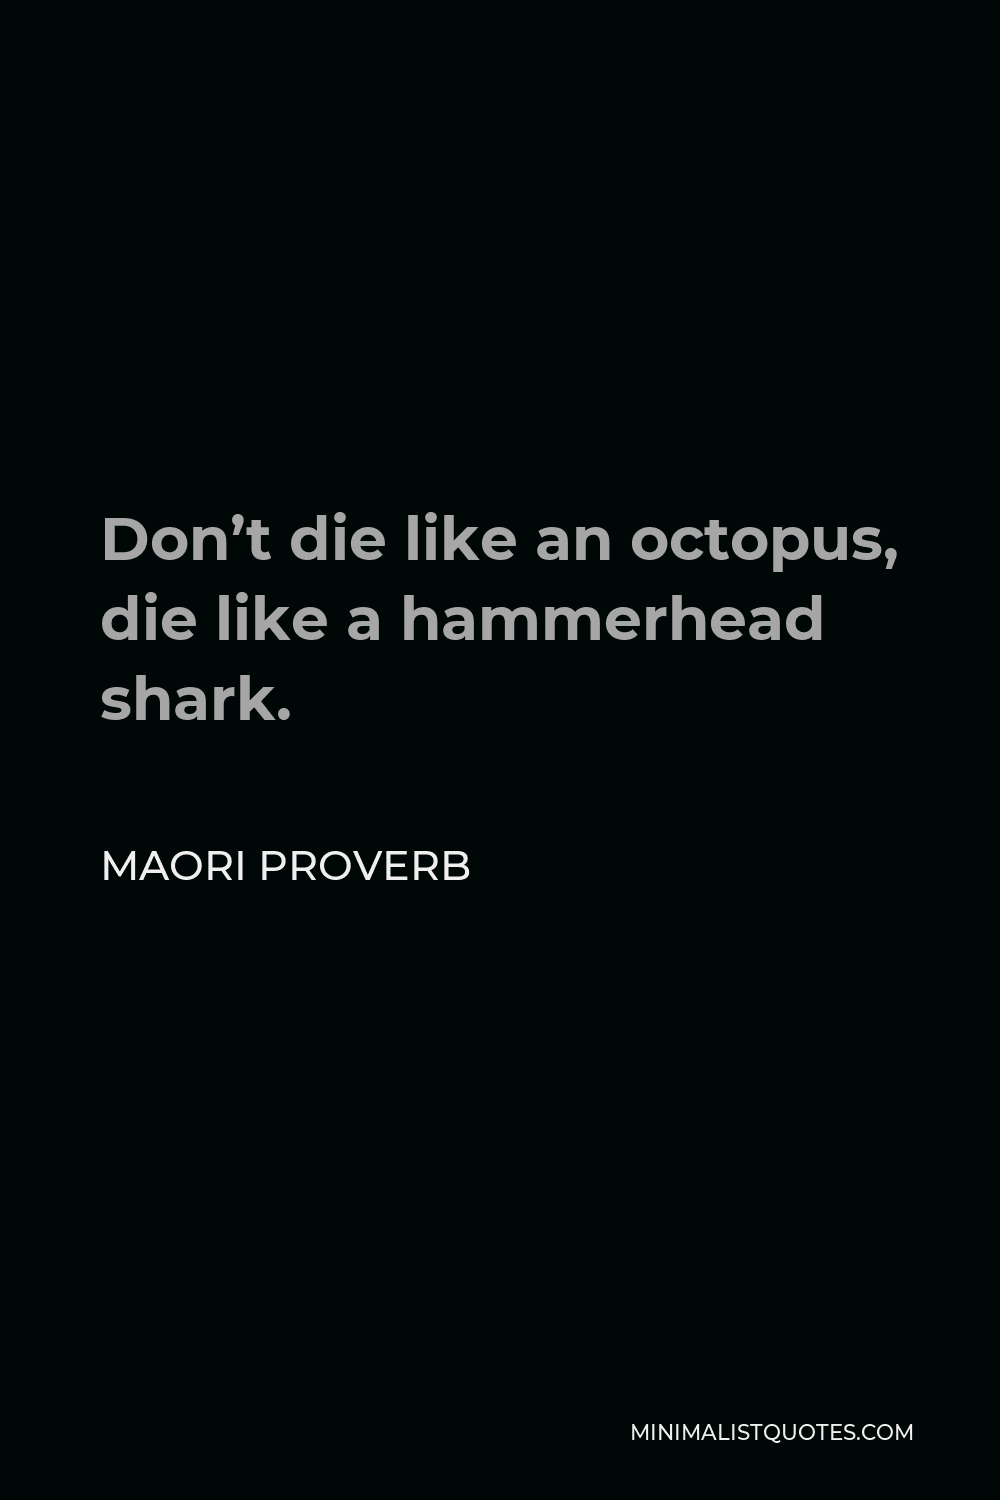 Maori Proverb Quote - Don’t die like an octopus, die like a hammerhead shark.